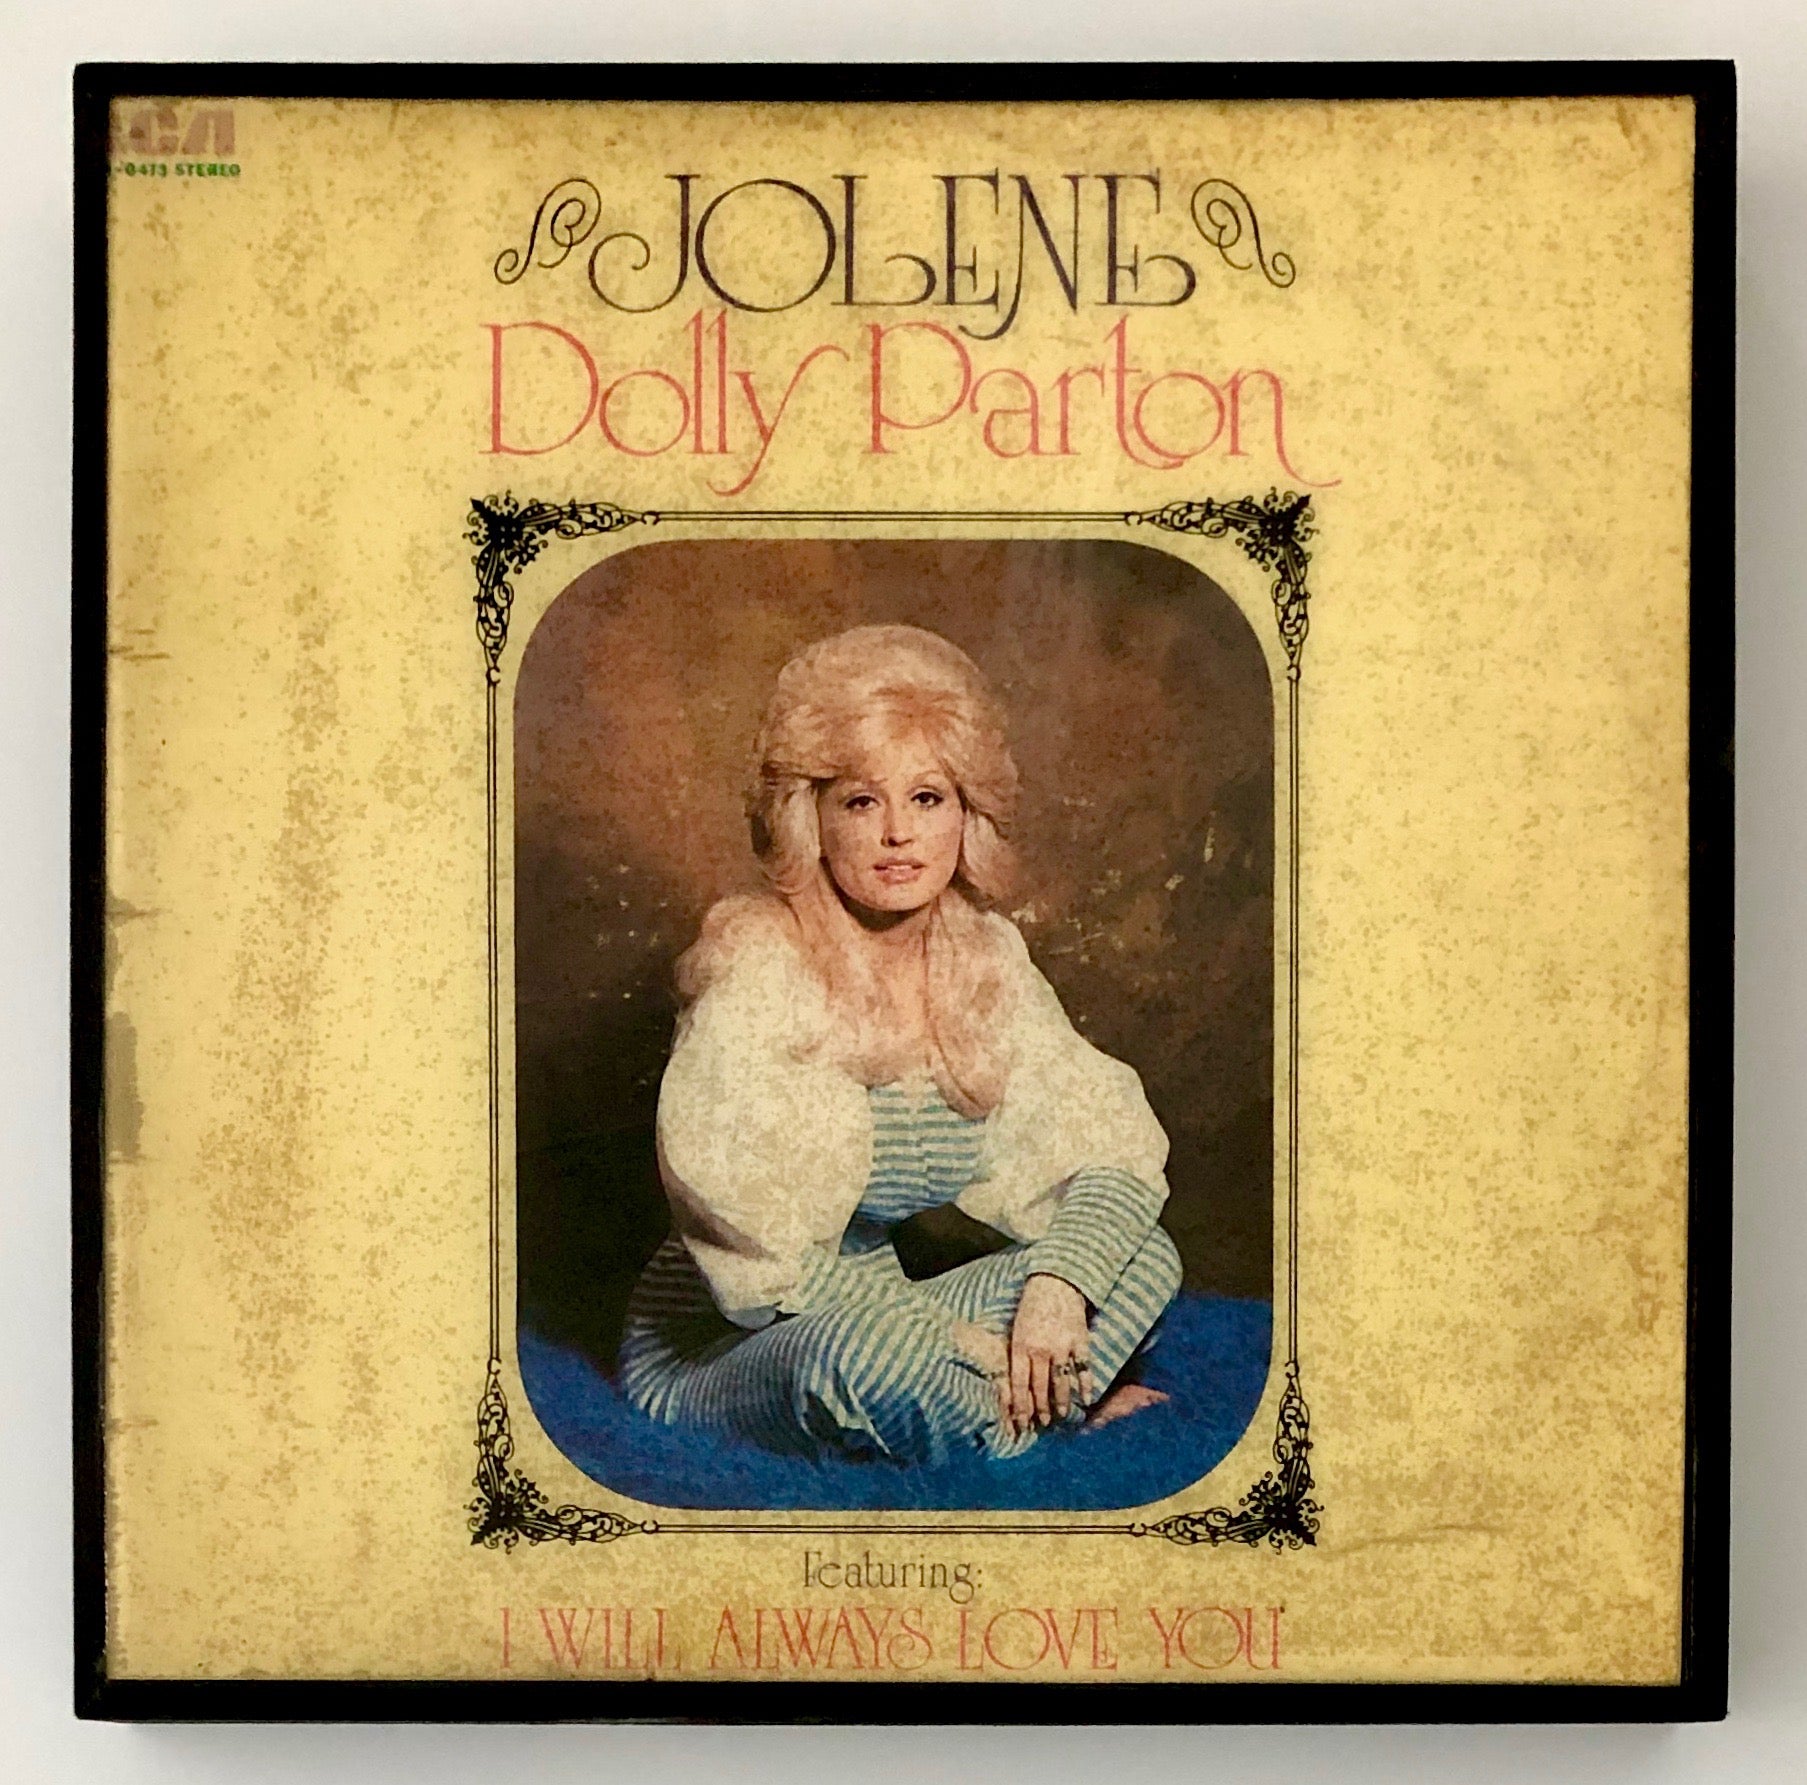 DOLLY PARTON - Jolene